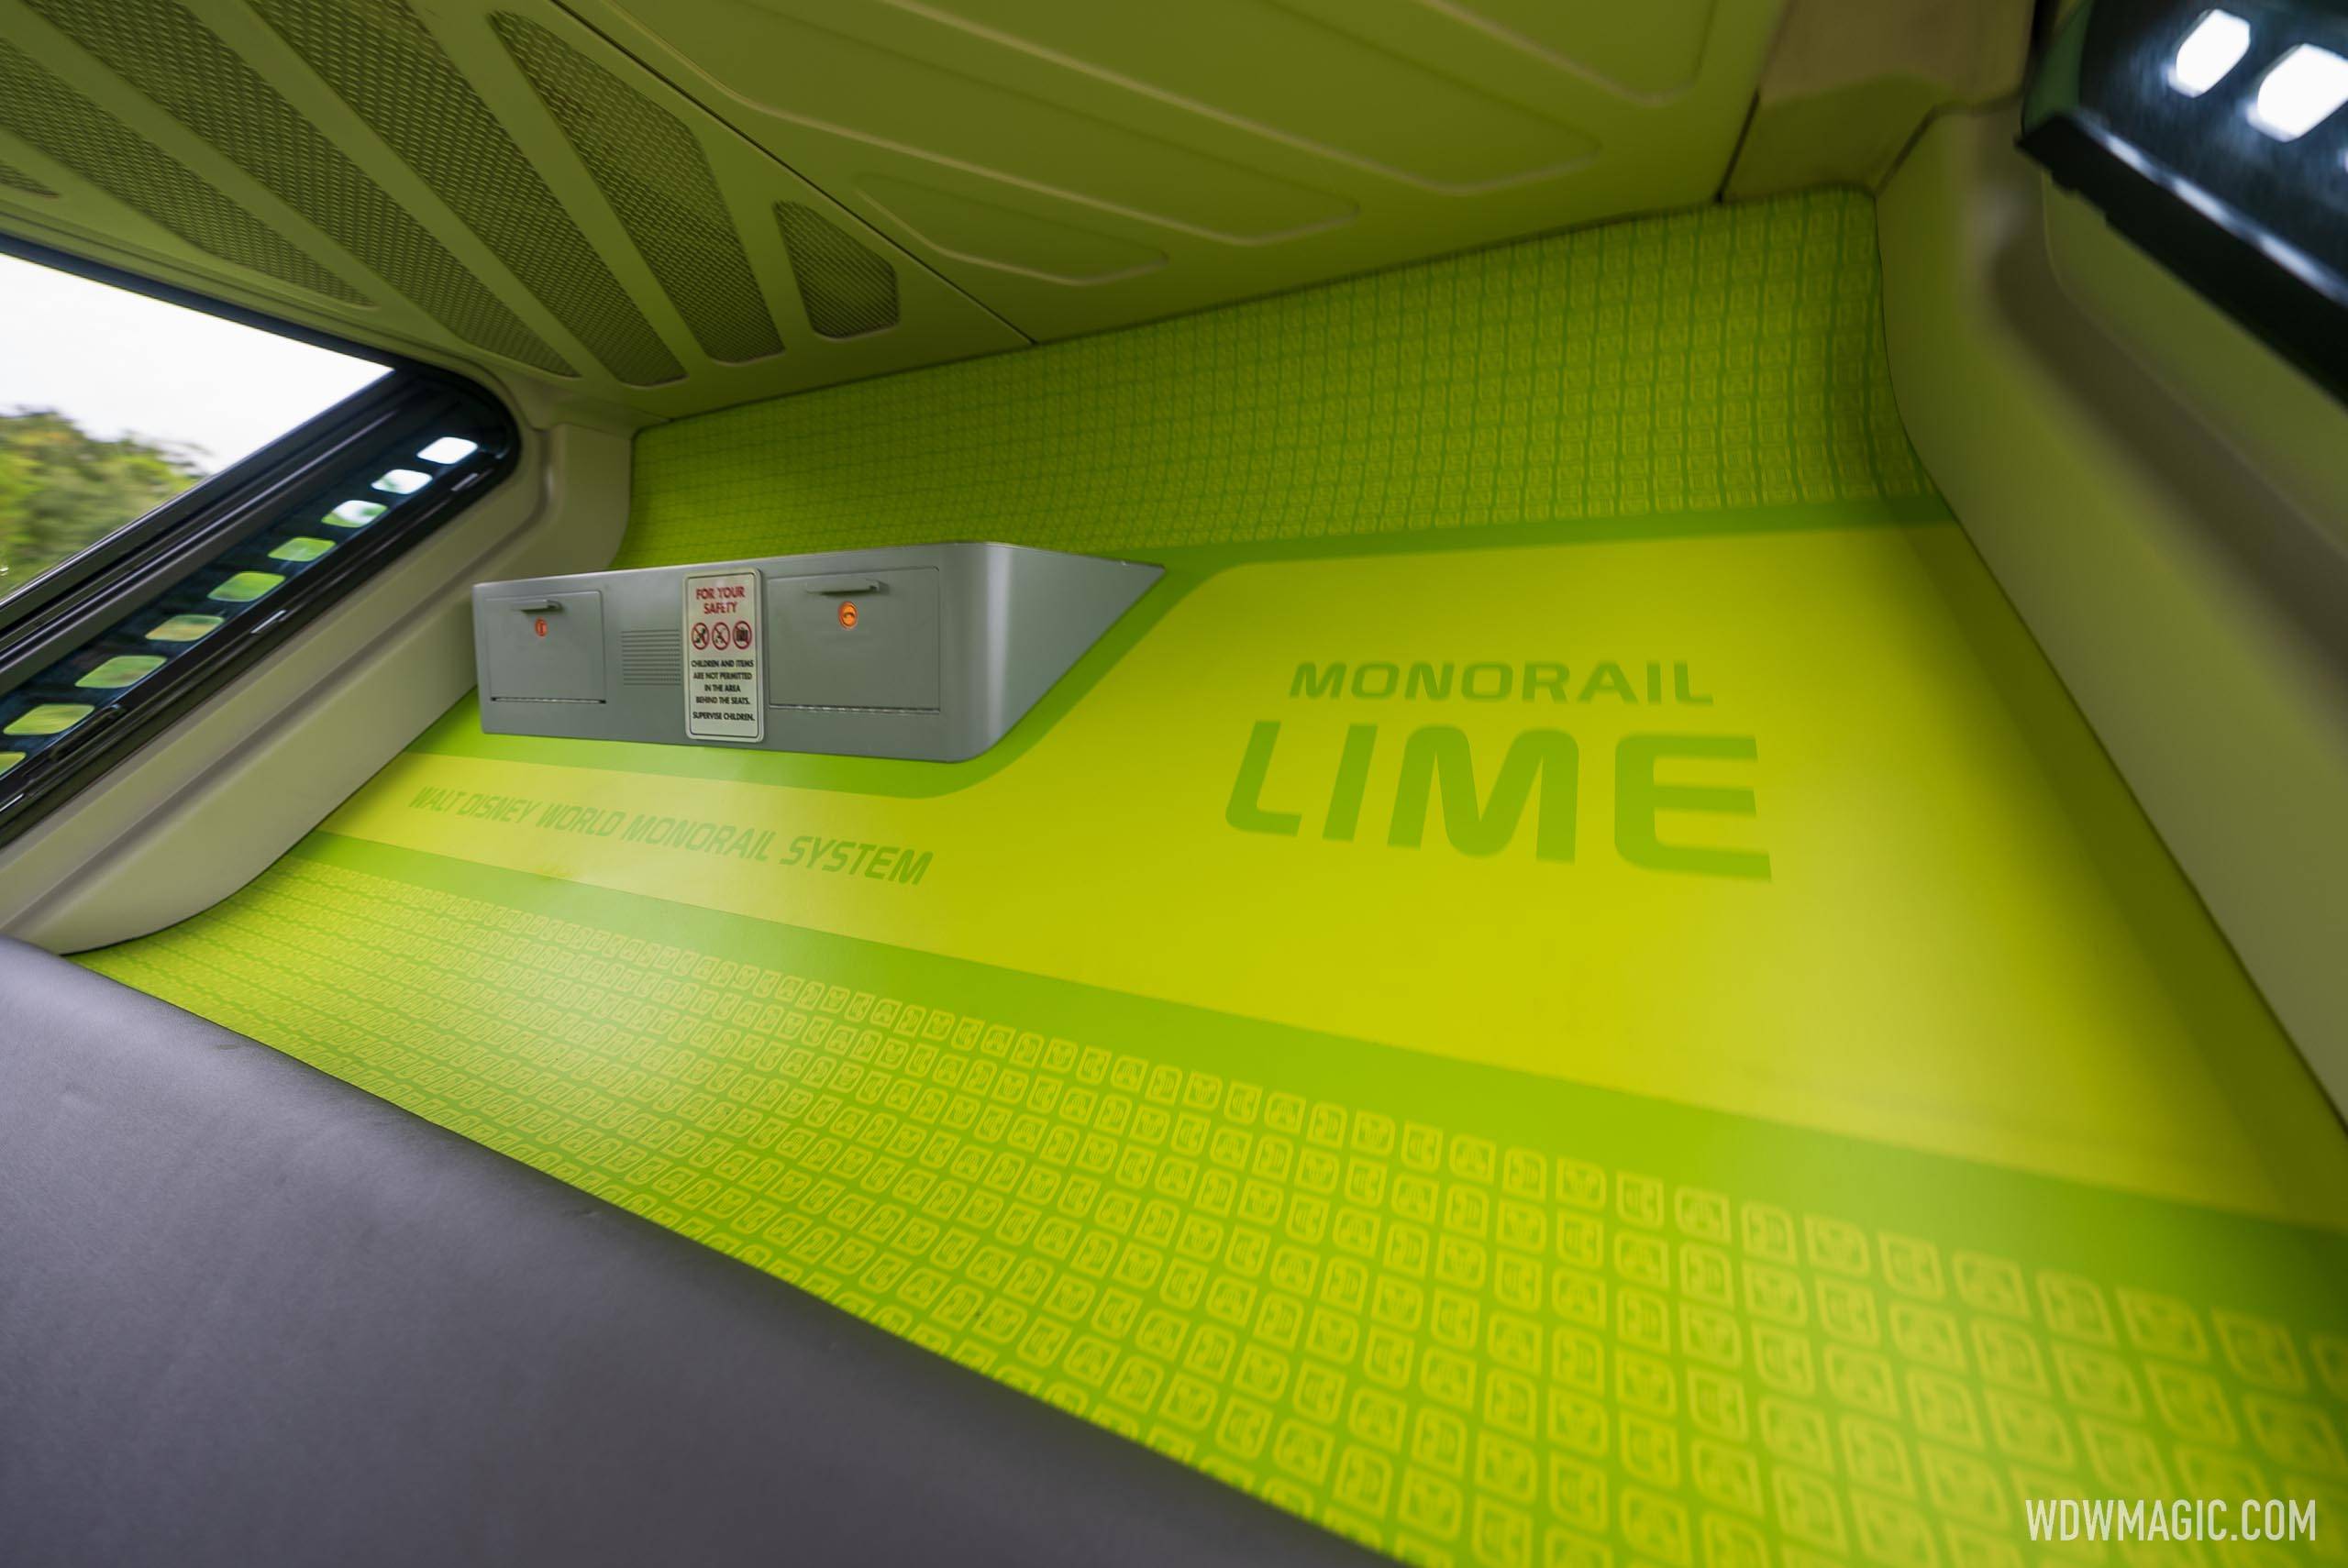 Monorail Lime refurbishment August 2022